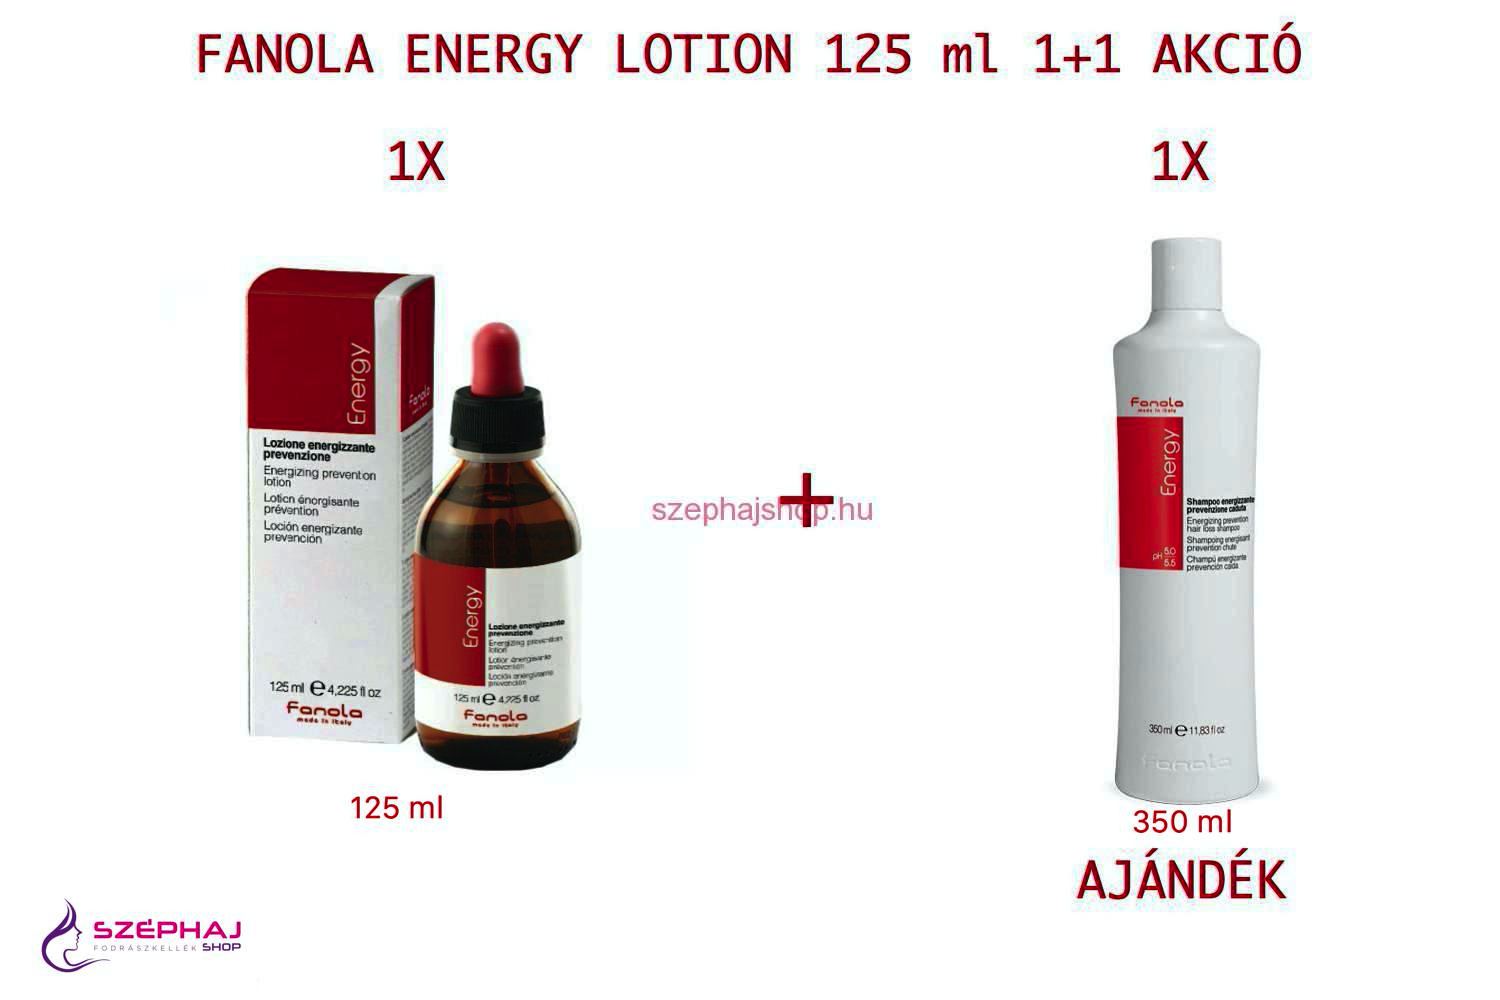 FANOLA Energy Lotion 125 ml 1+1 AKCIÓ